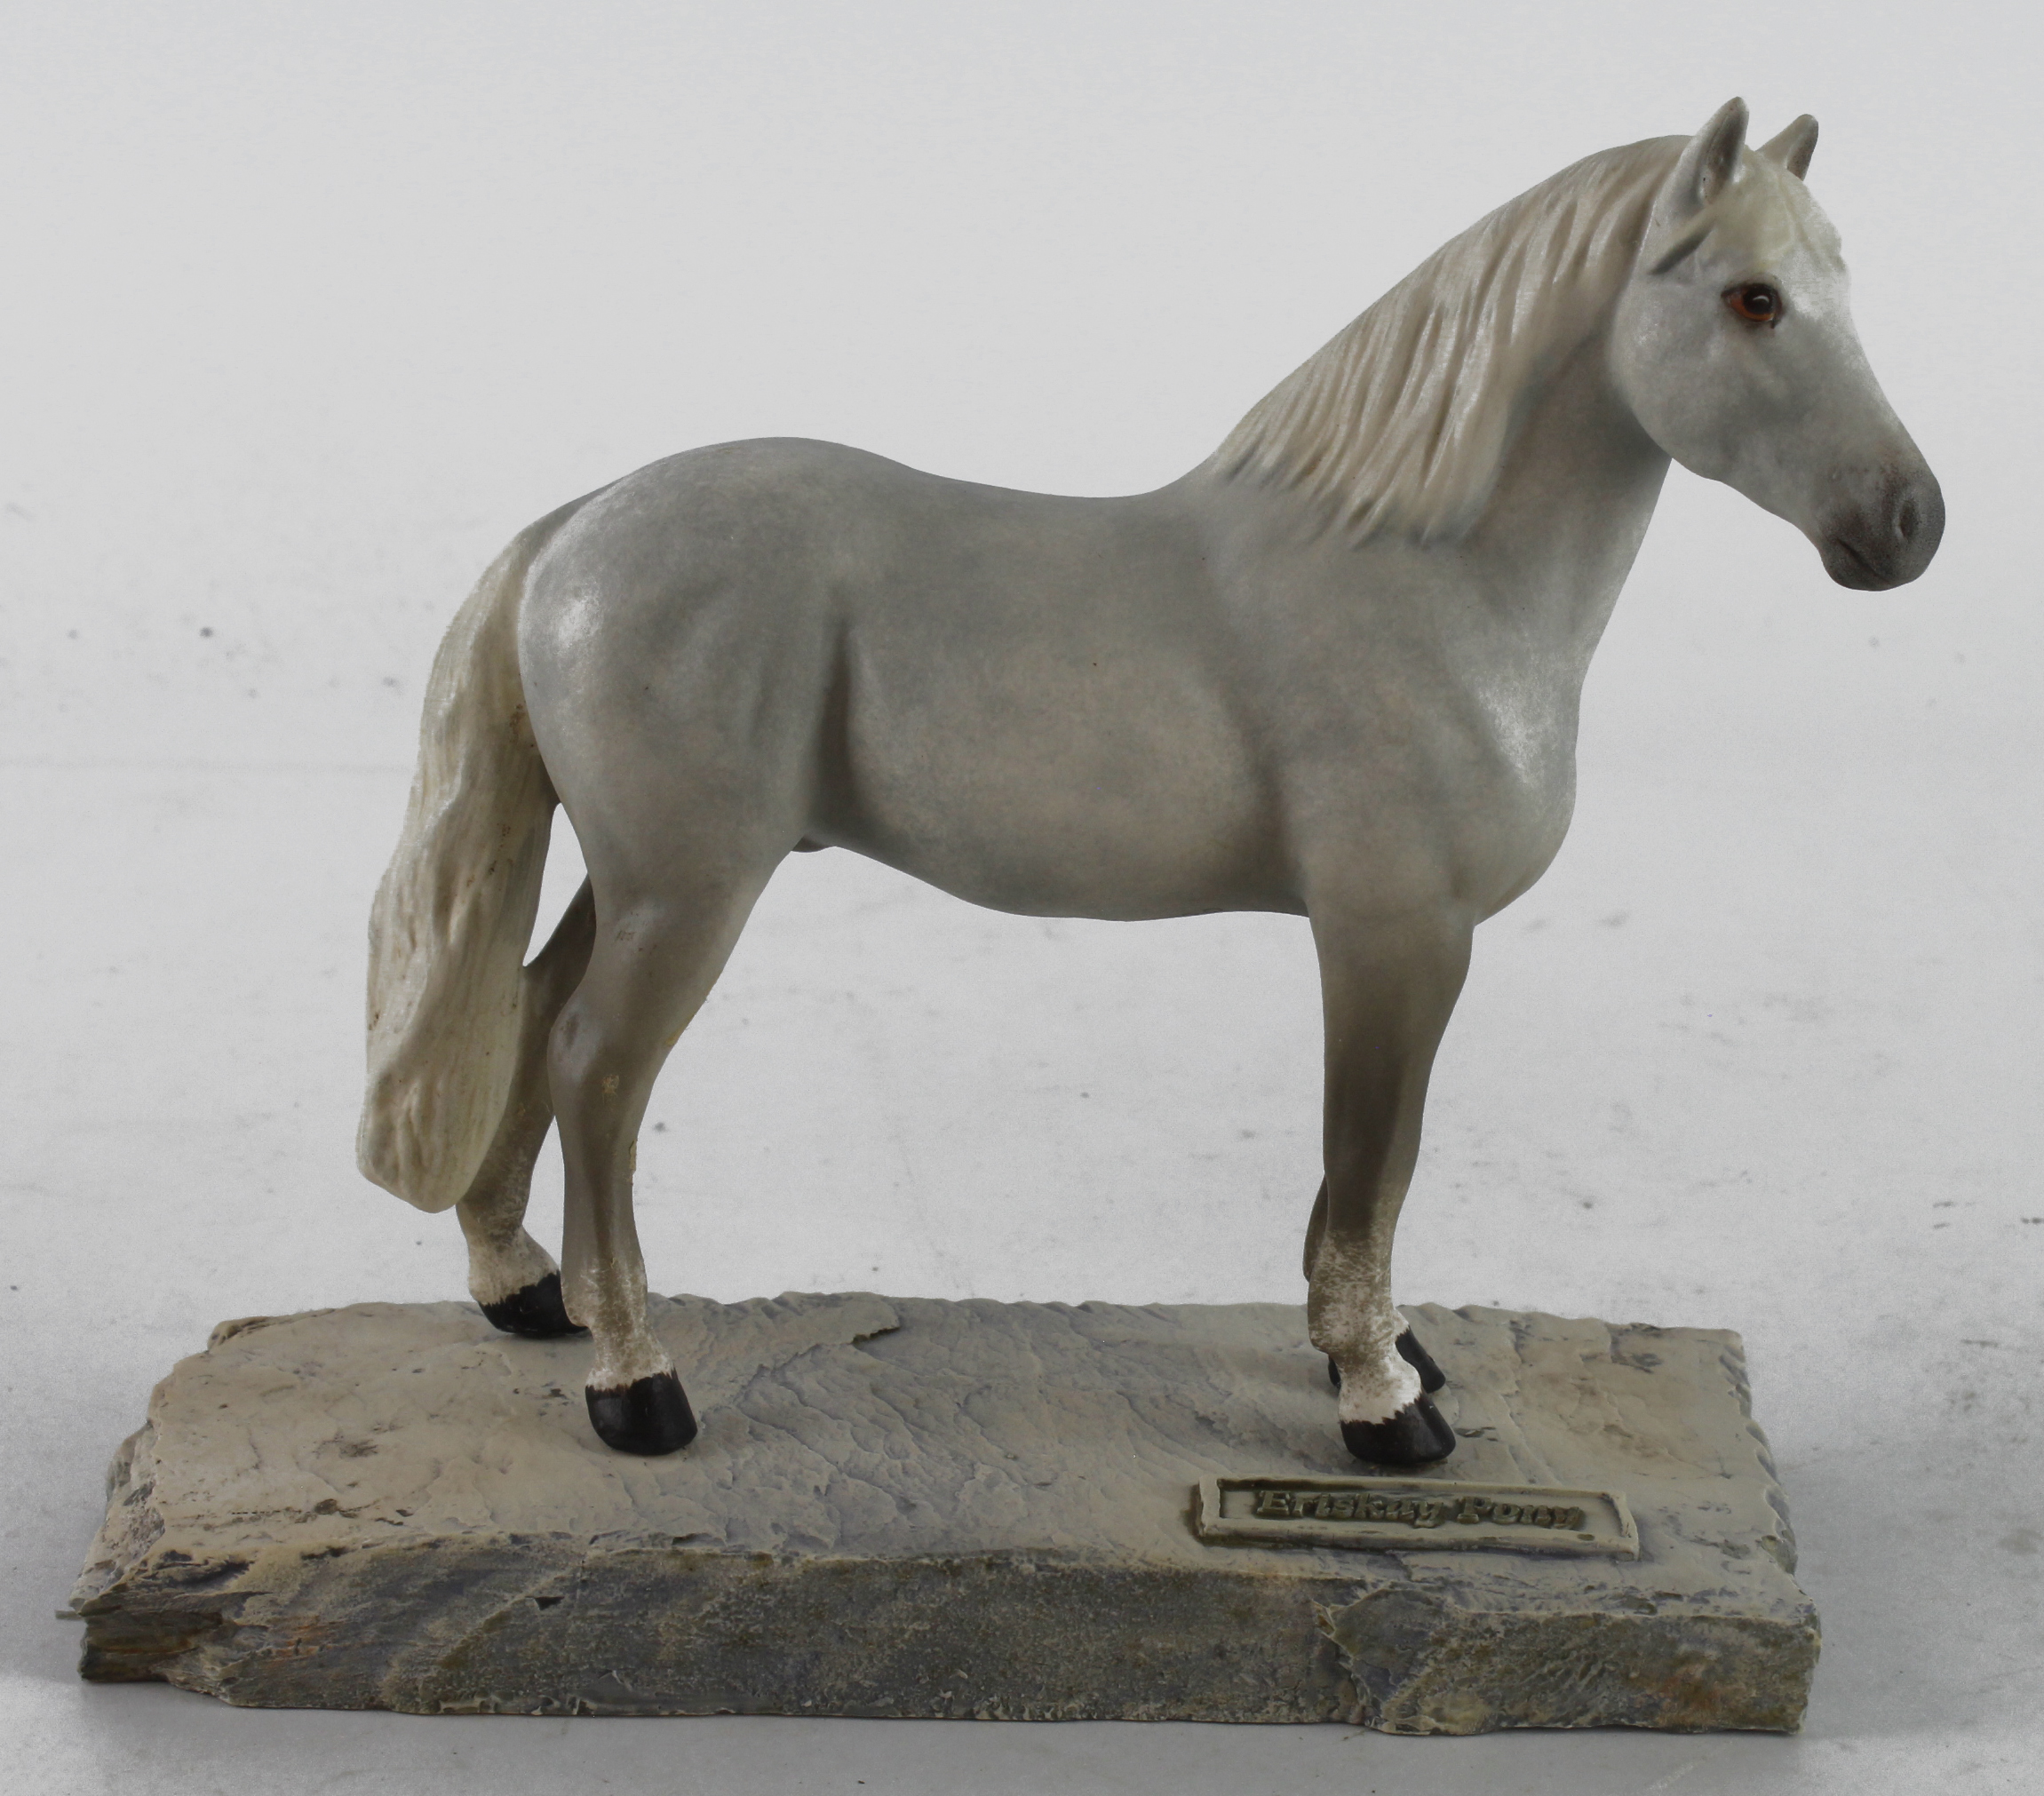 Beswick figure 'Eriskay Pony', on plinth, height 16cm approx. (figure has come unstuck from plinth)